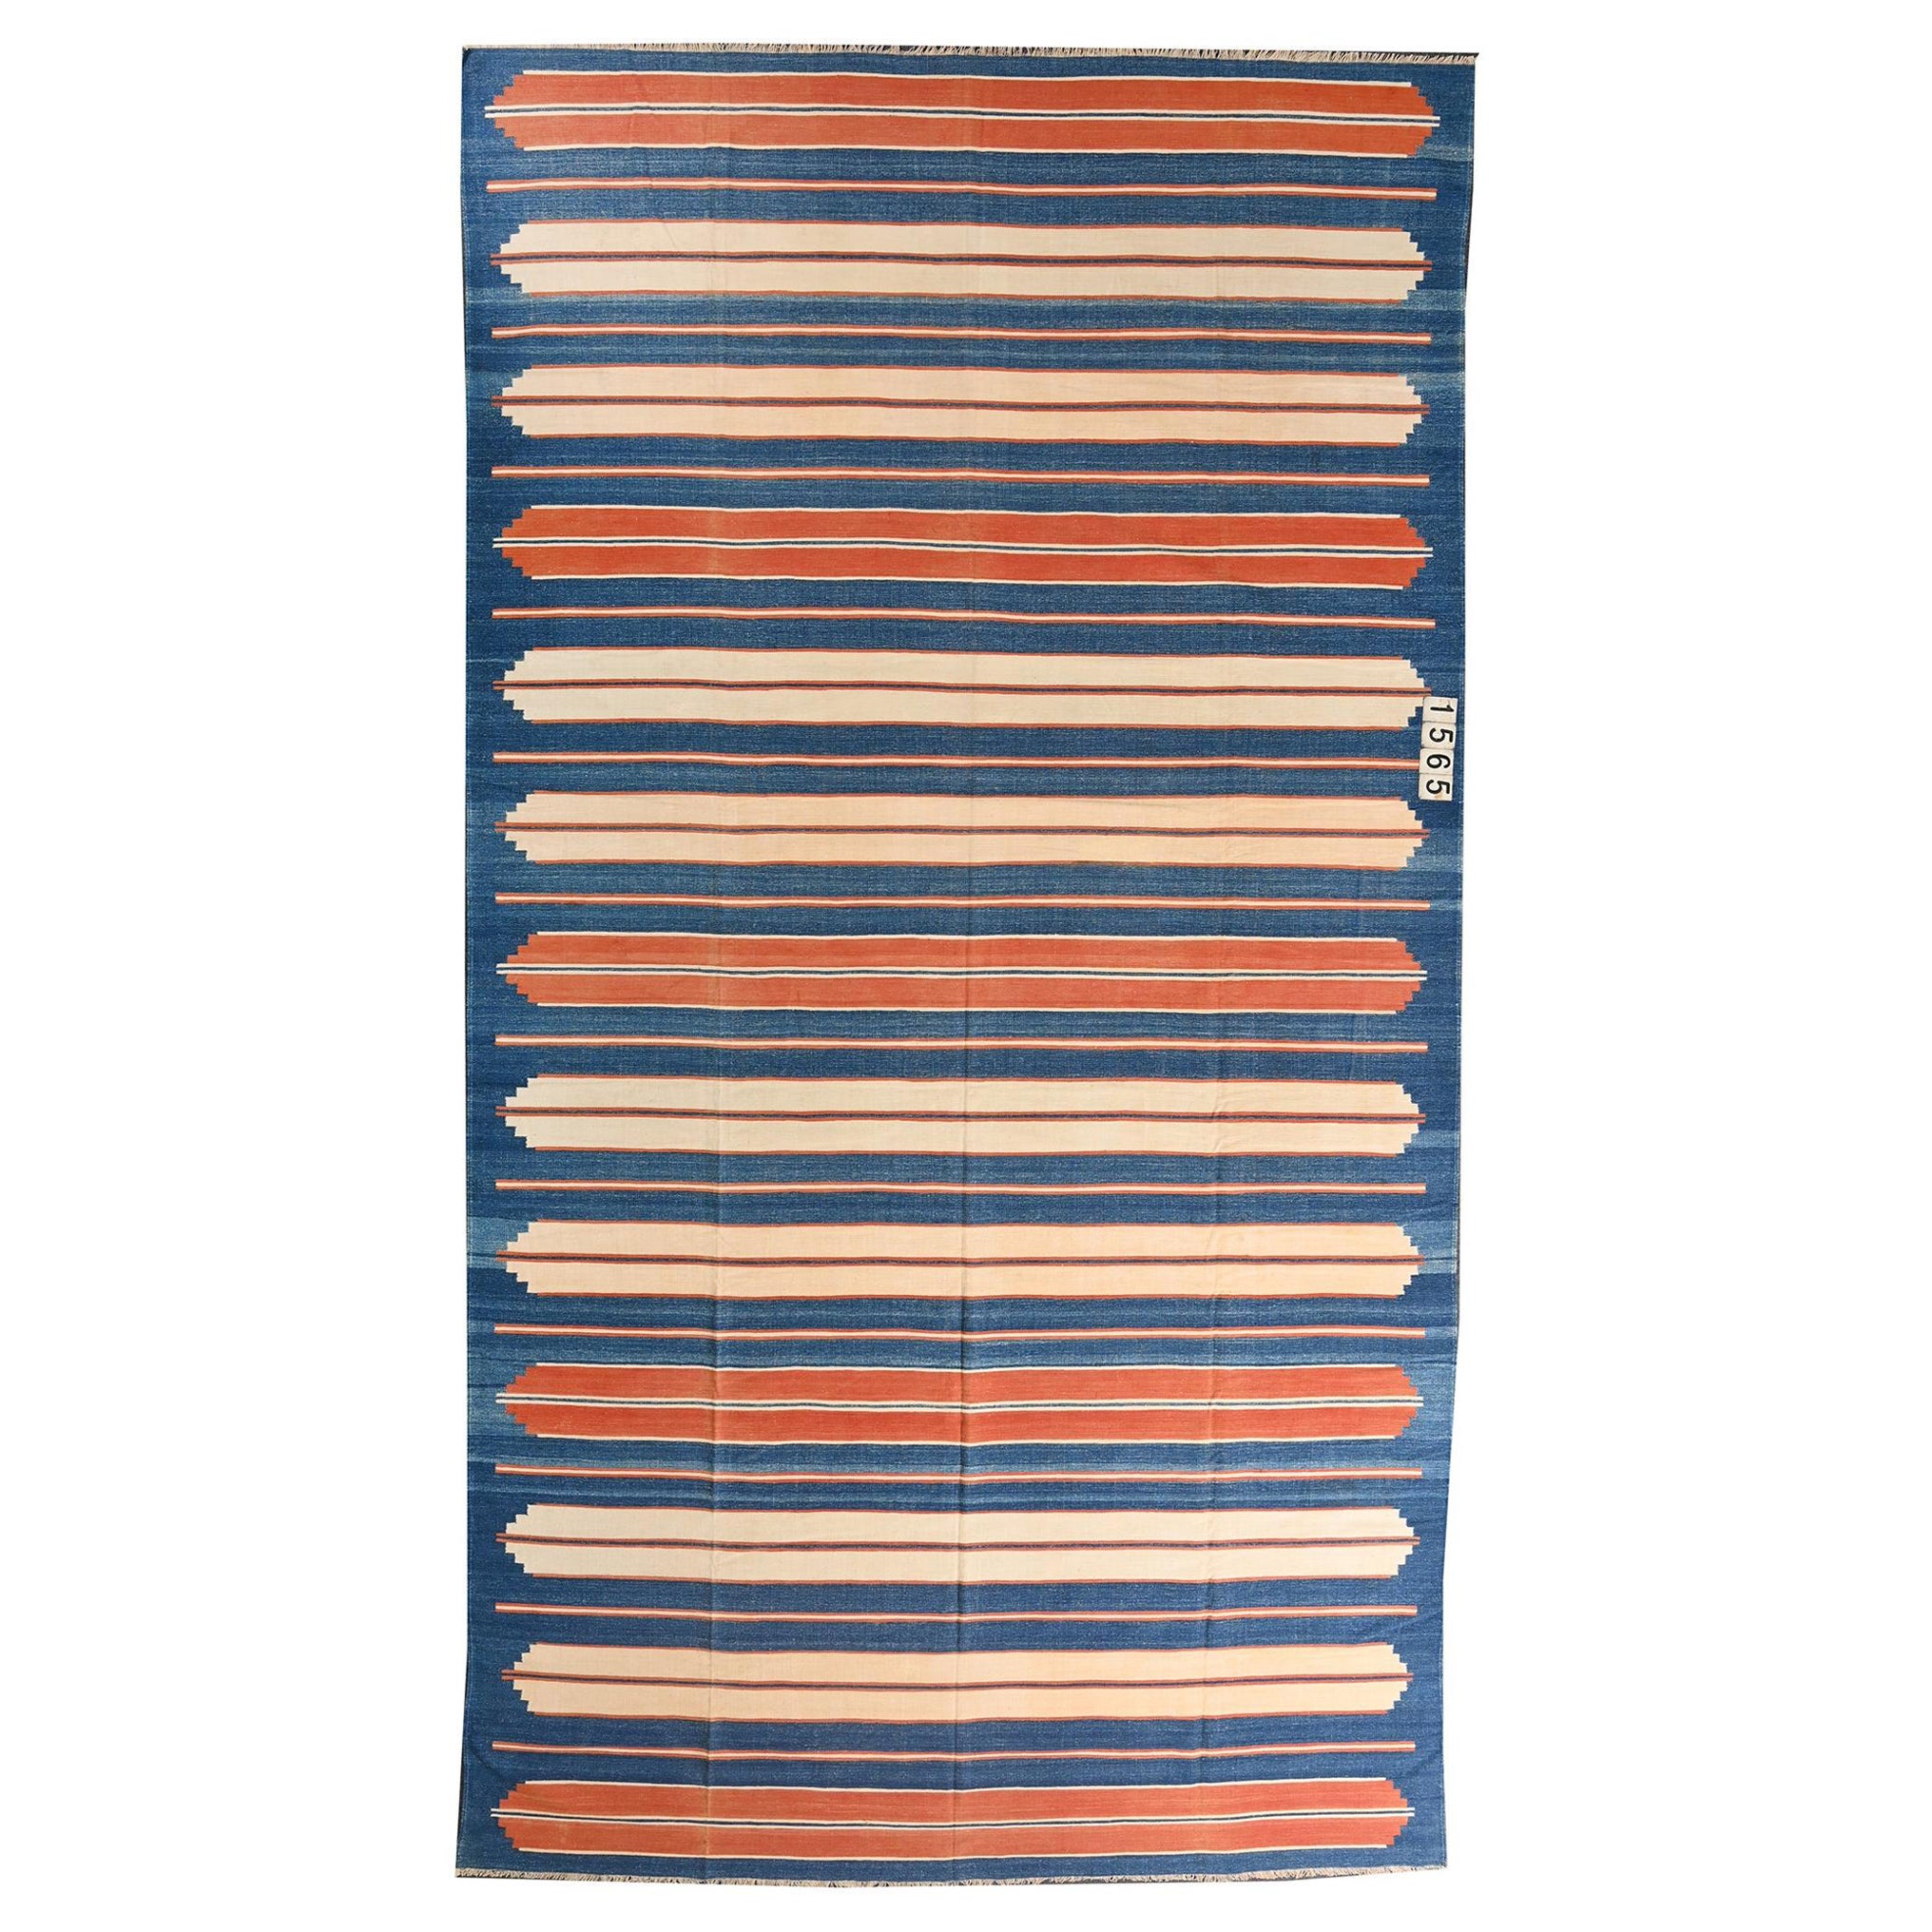 Vintage Dhurrie Flat Weave in Blue and Orange Stripes Patterns by Rug & Kilim For Sale